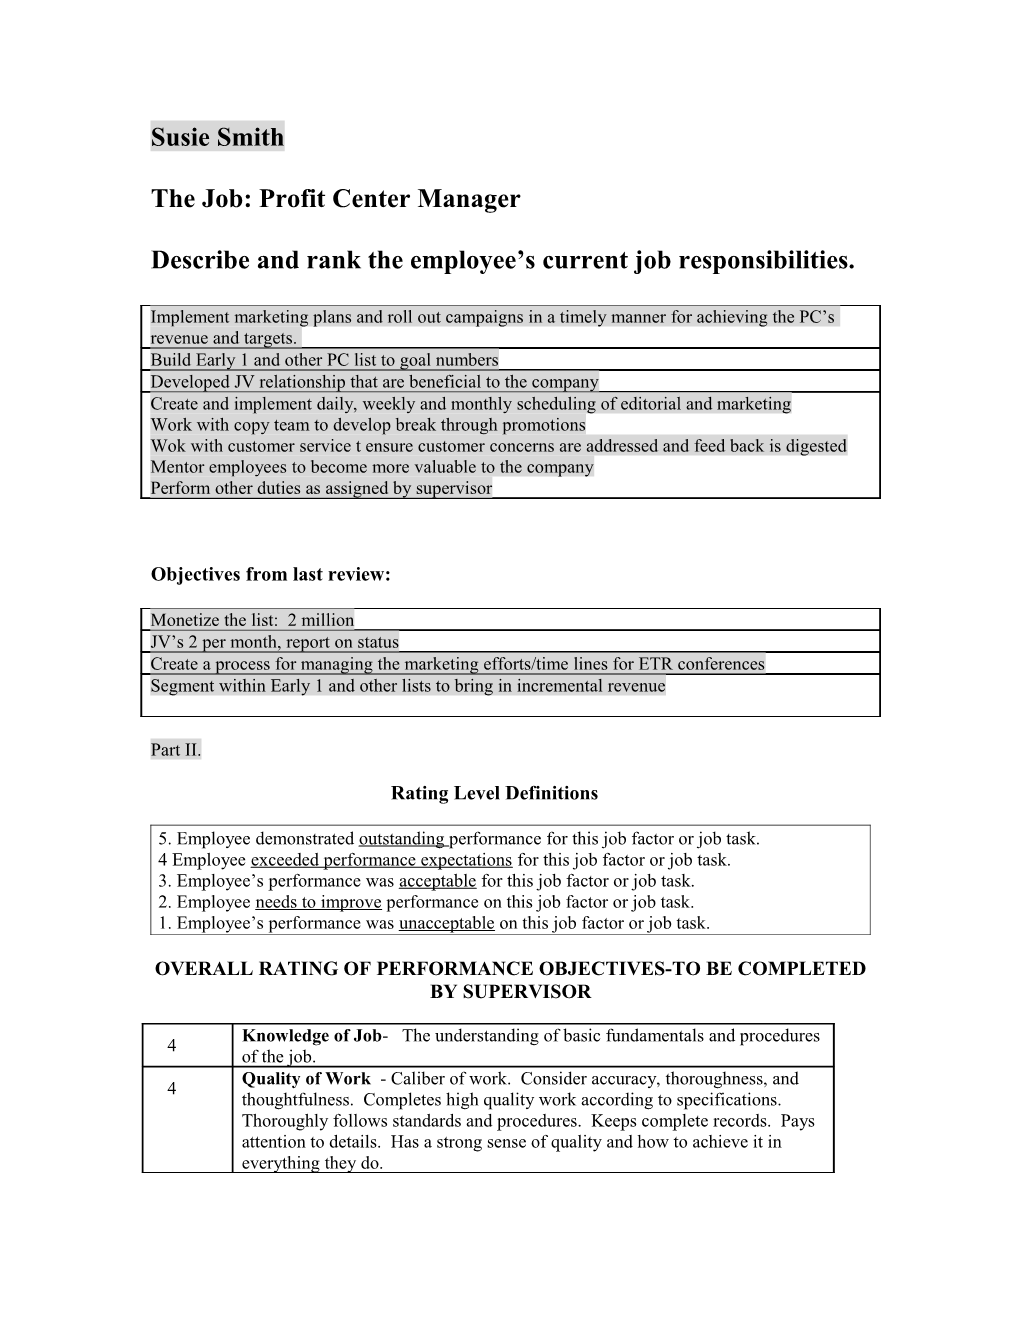 The Job: Profit Center Manager